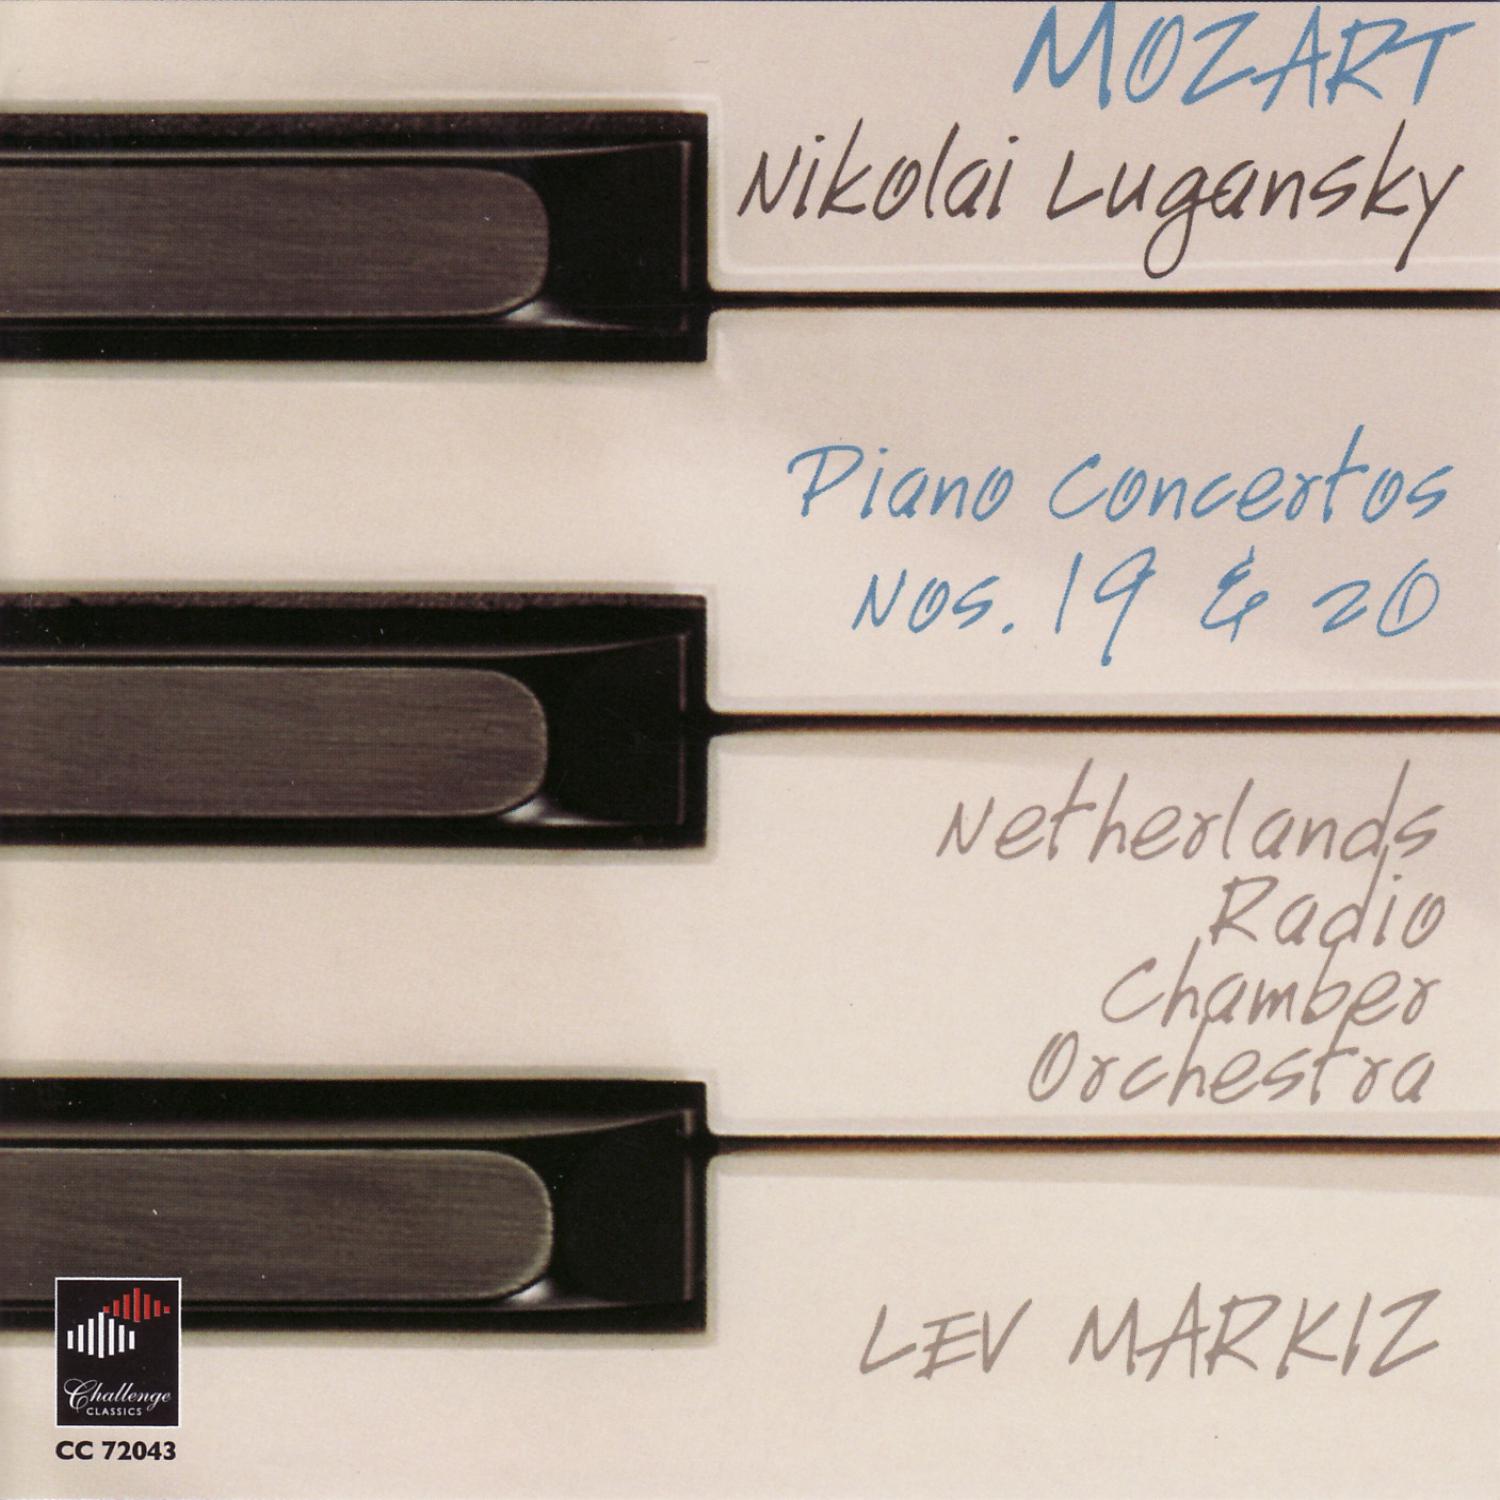 Nikolai Lugansky - Piano Concerto No. 20 in D Minor, KV 466: Romance